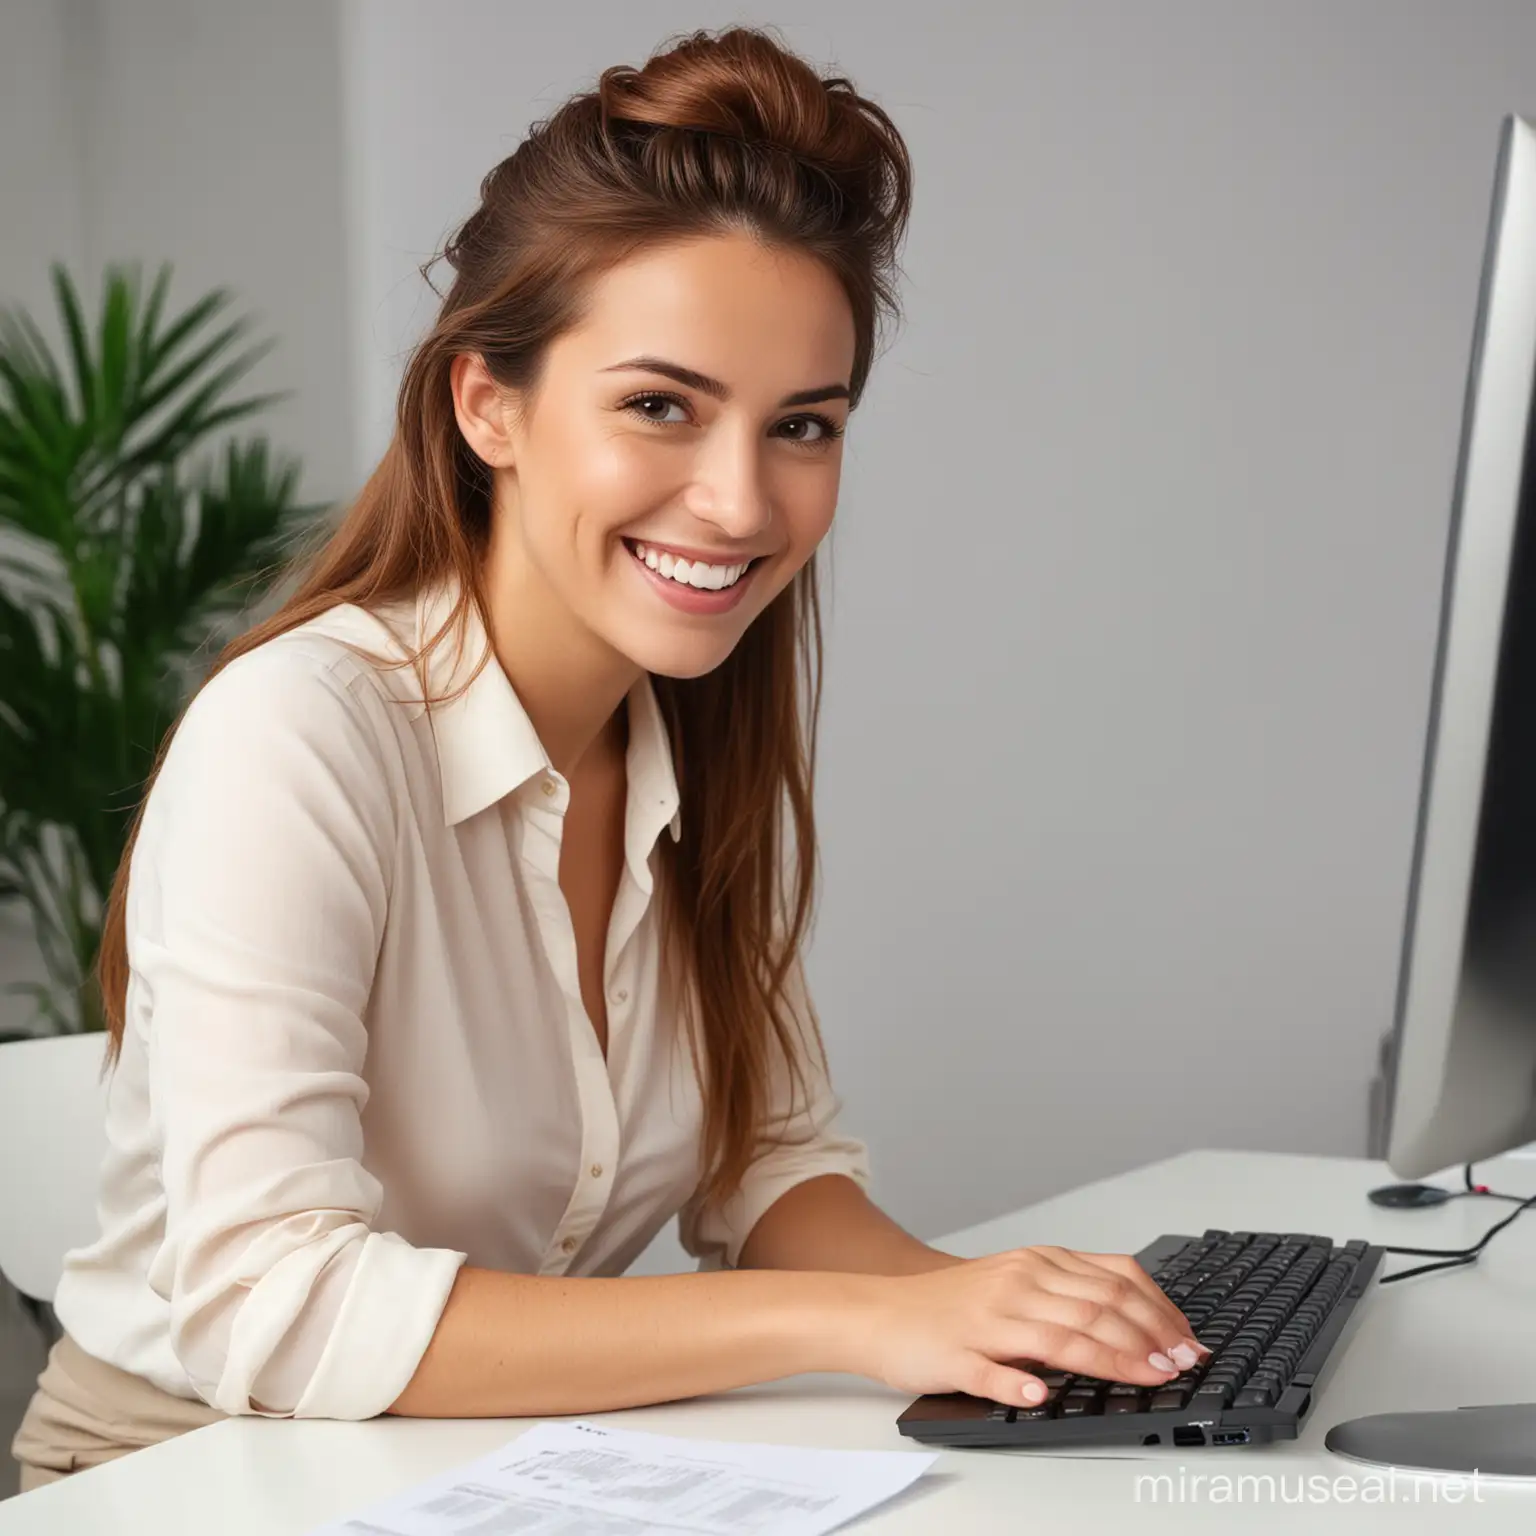 Joyful Woman Using Computer in Modern Office Setting